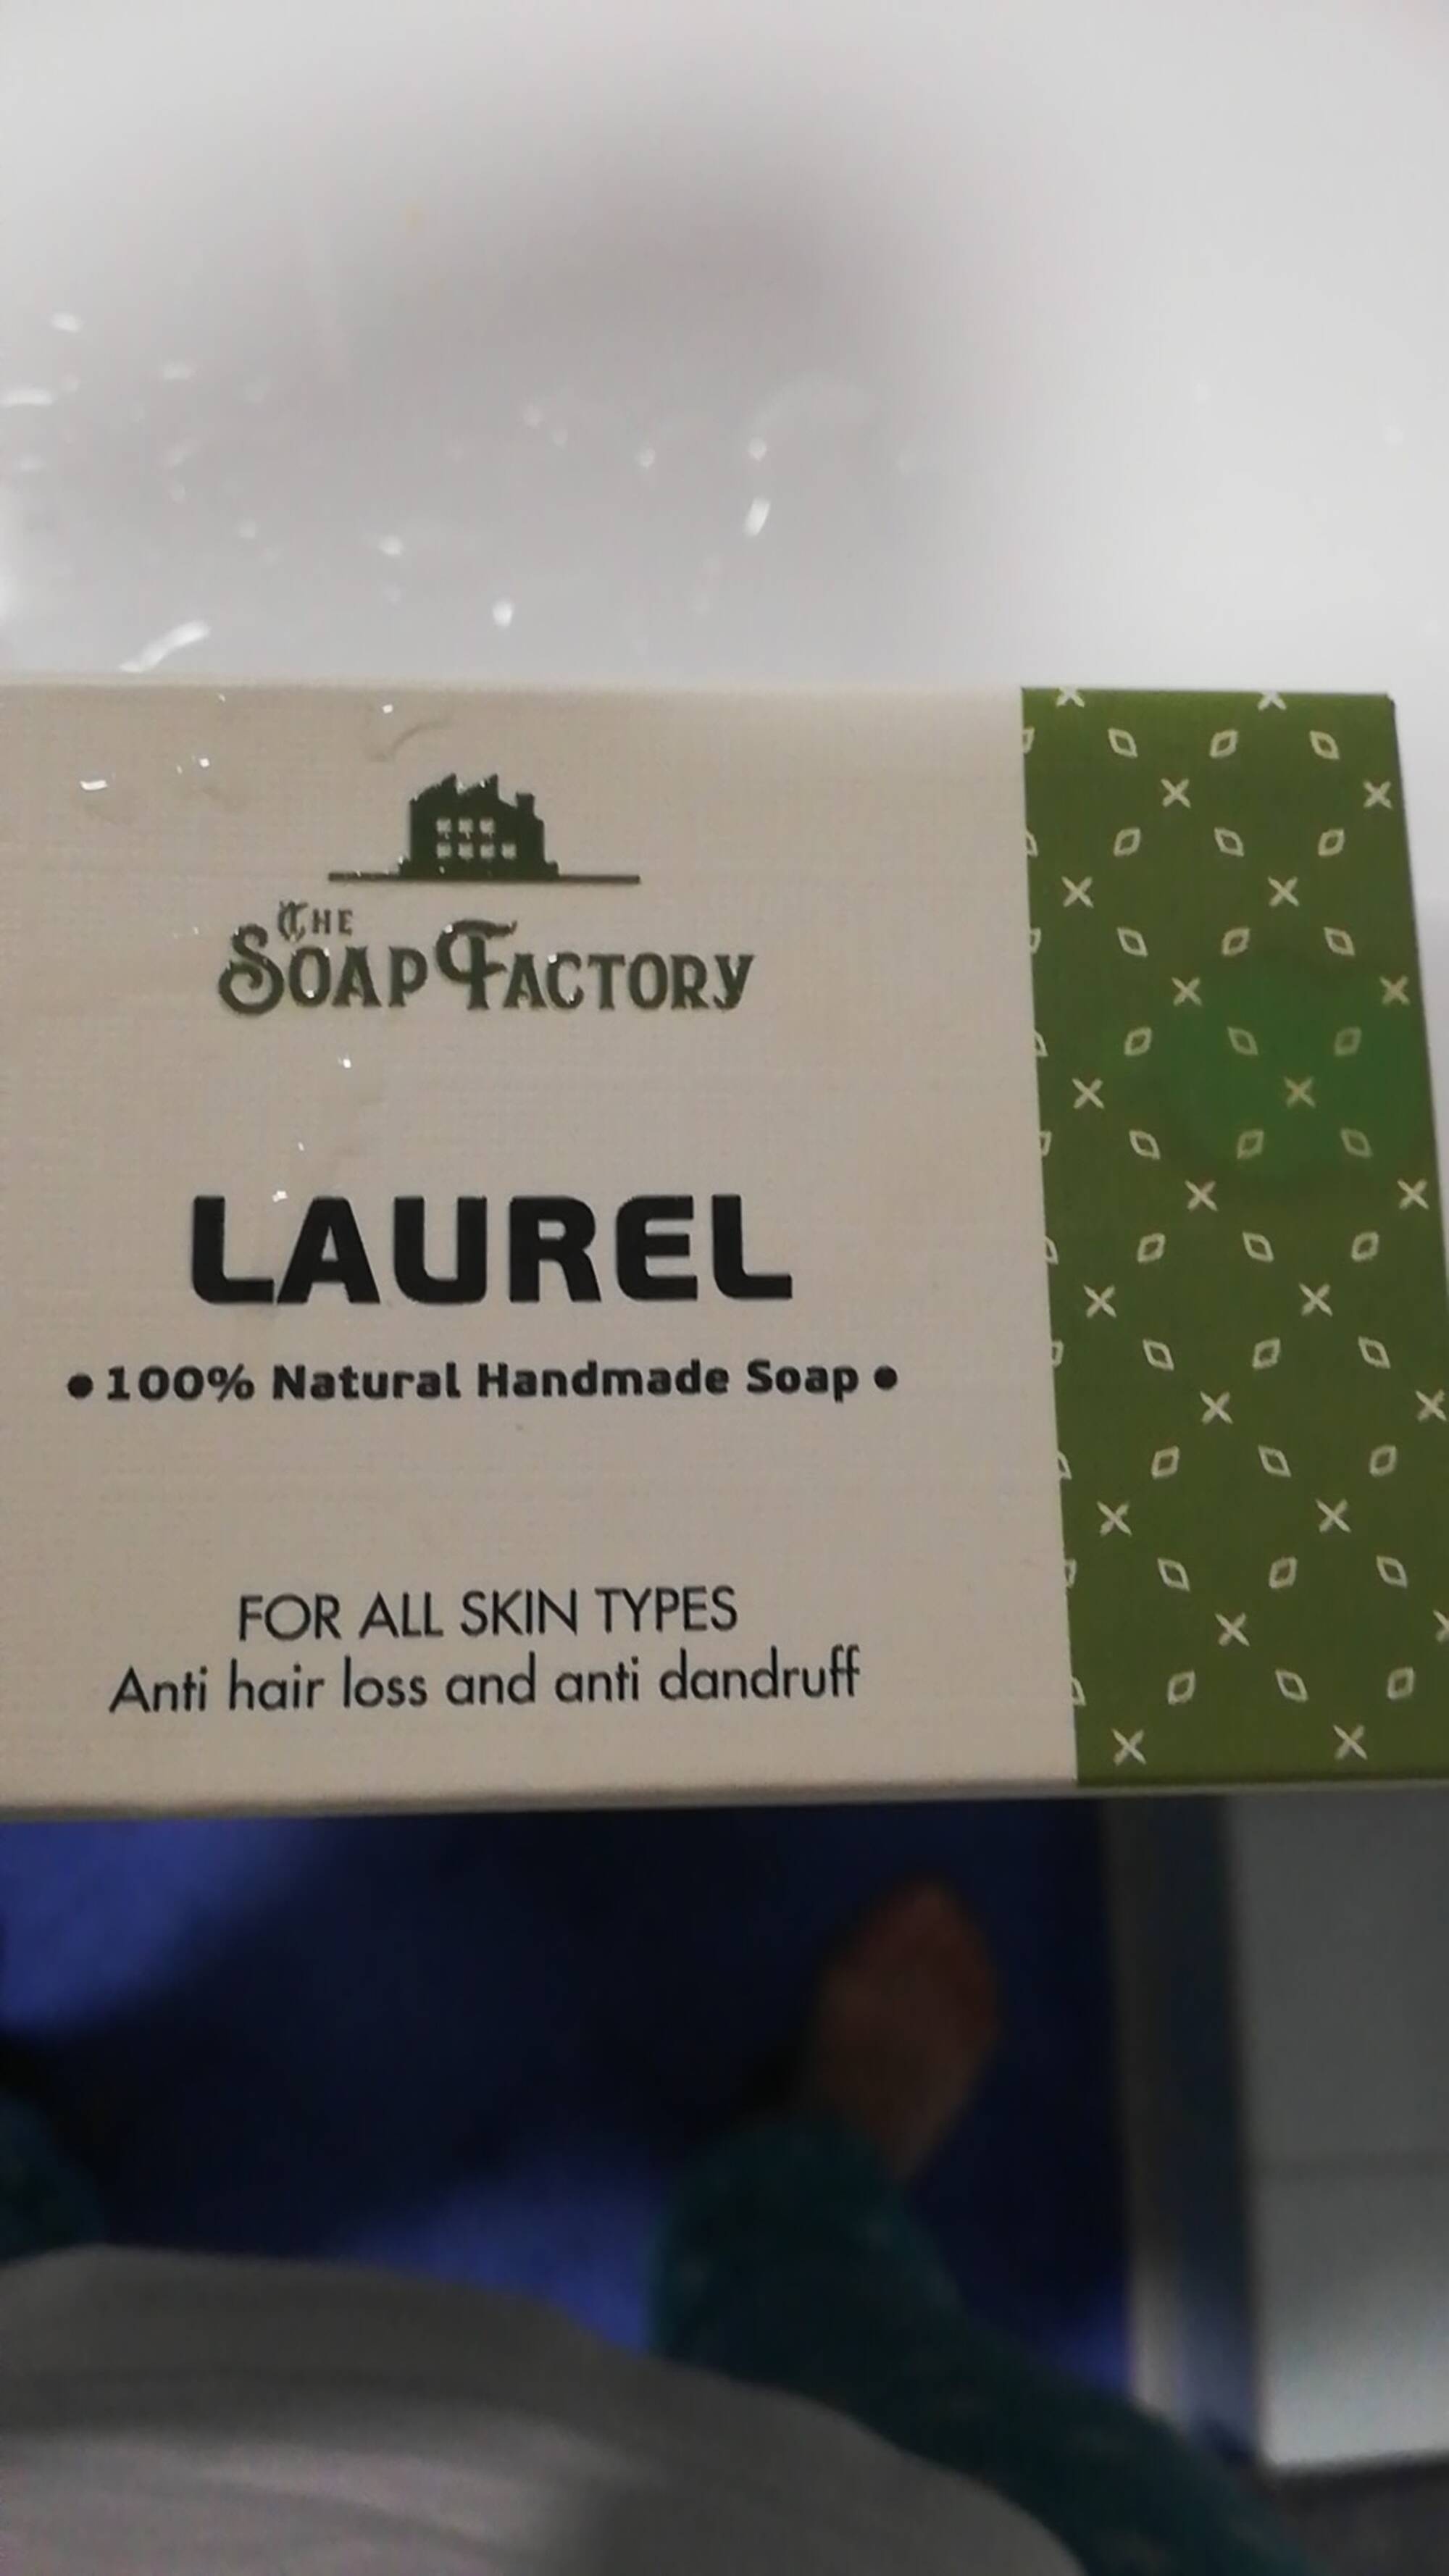 THE SOAP FACTORY - Laurel - 100% natural handmade soap